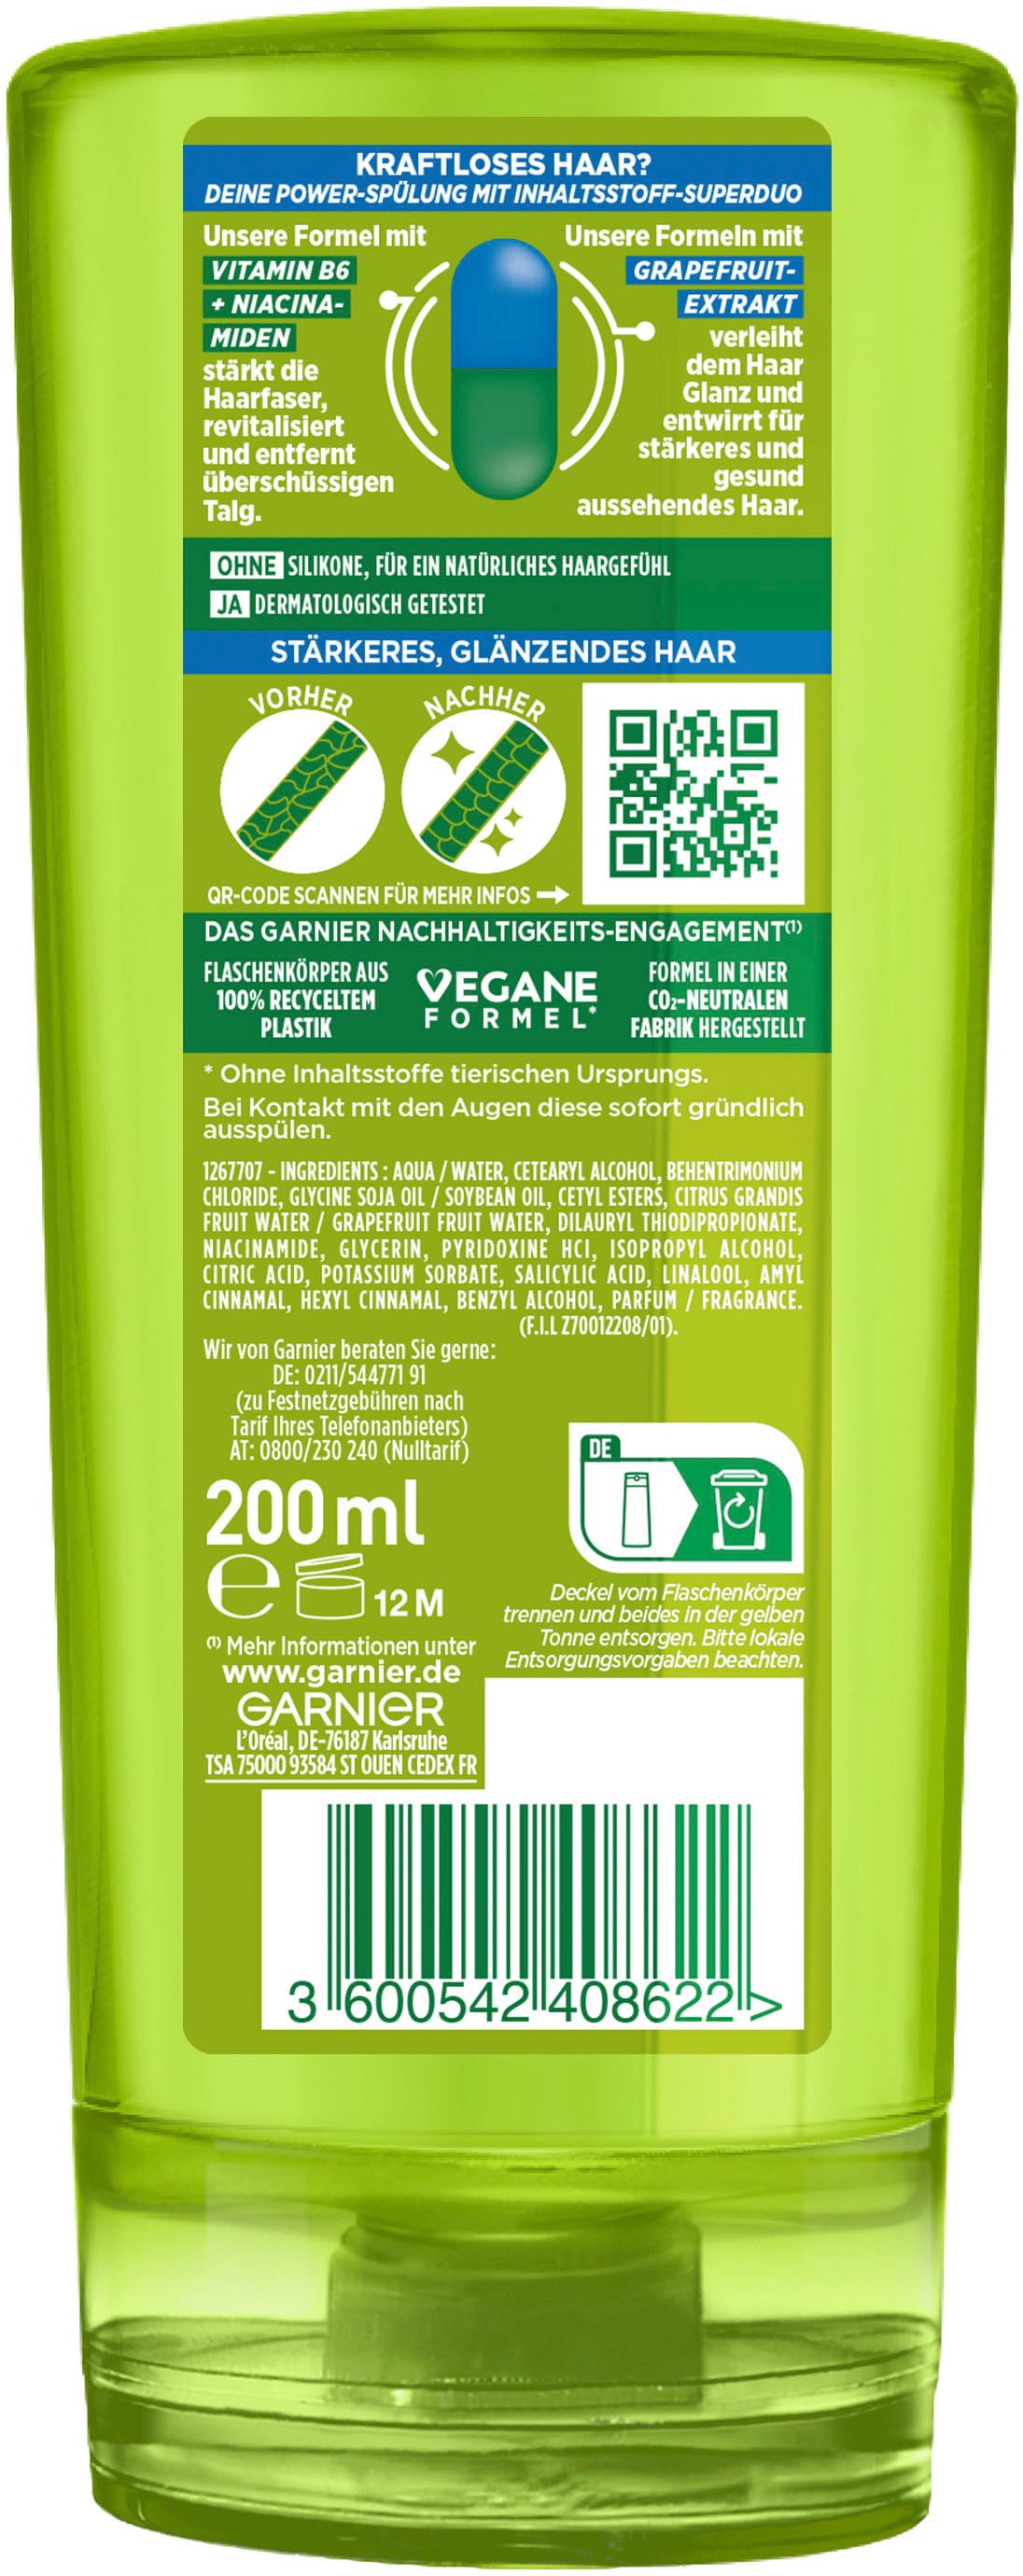 GARNIER Haarspülung »Garnier Fructis Kraft & Glanz Spülung« online  bestellen | UNIVERSAL